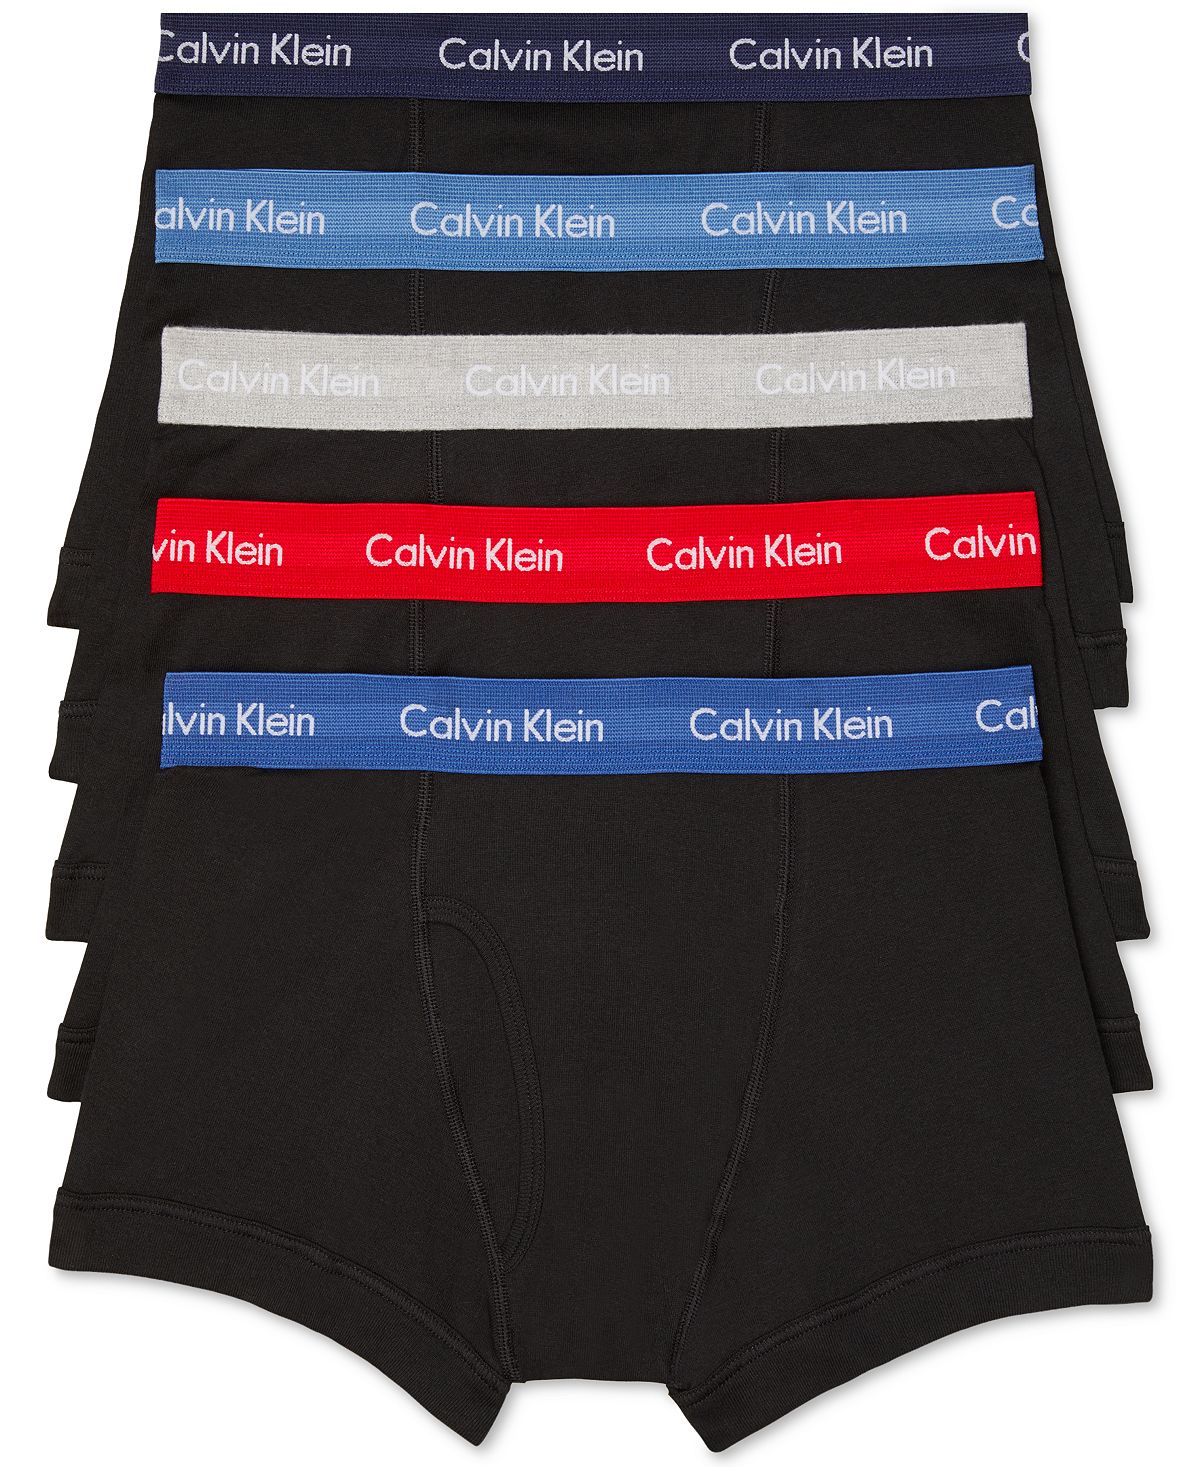 Calvin Klein 5-pk. Cotton Classics Trunks Black/Temper/Lt.Grey